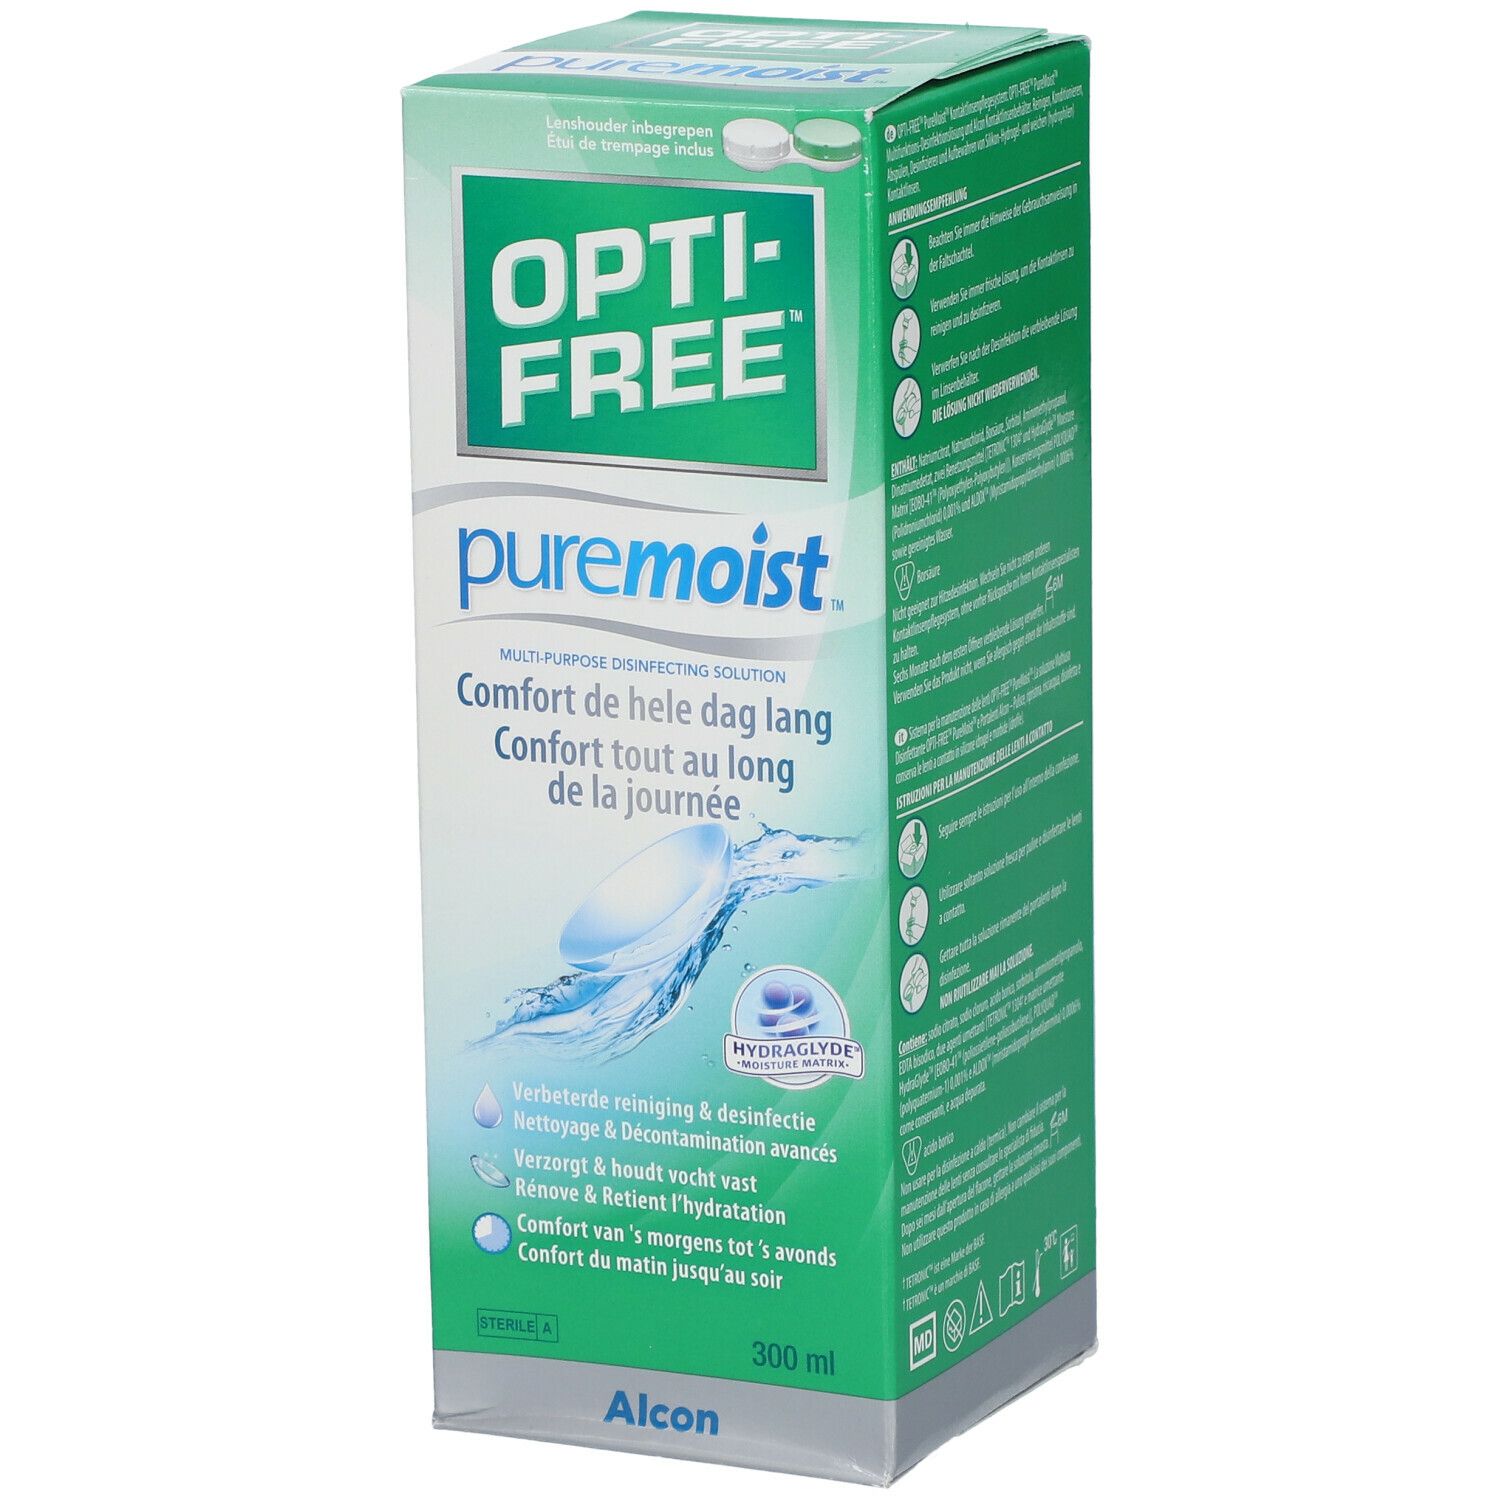 Image of Opti-free Puremoist